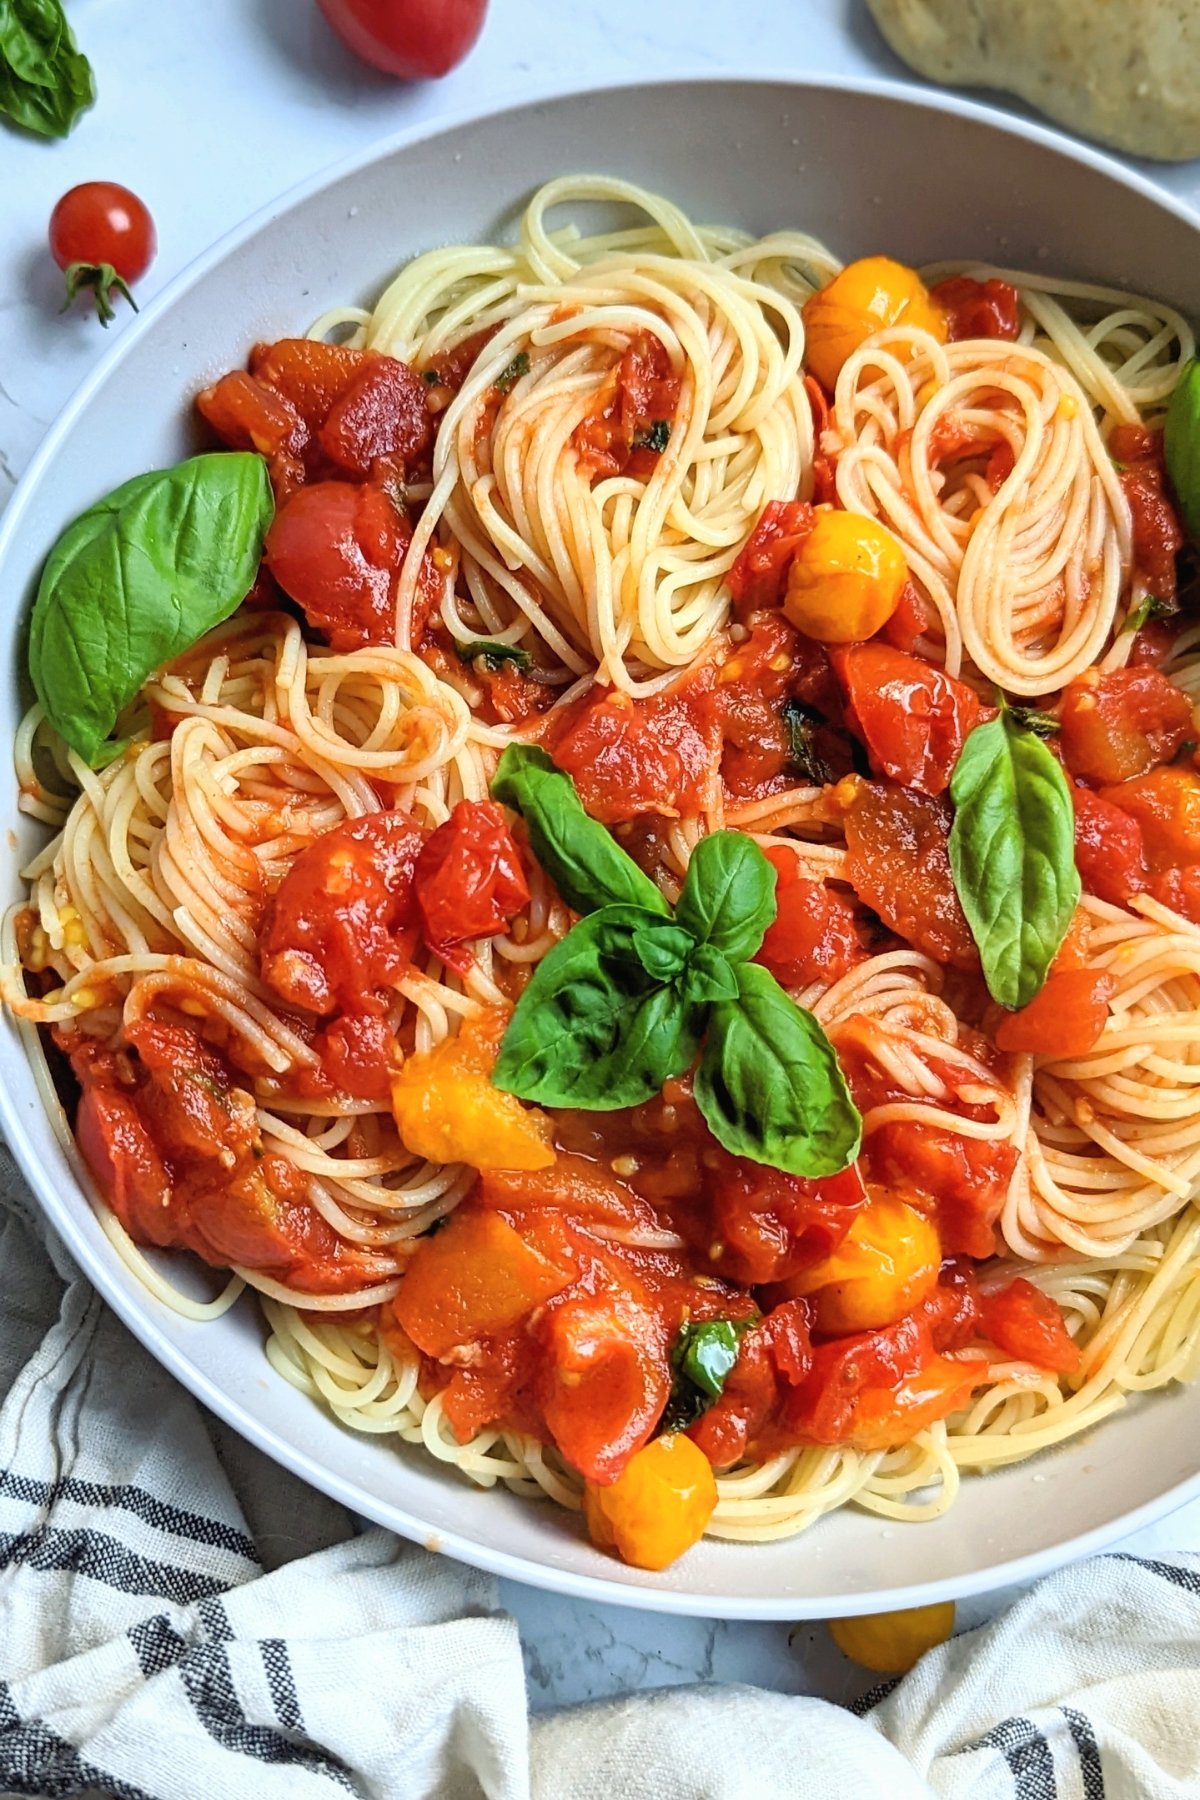 capellini pomodoro recipe vegan vegetarian pomodoro sauce for pasta healthy homemade fresh tomato sauce recipe with basil olive oil garlic and angel hair